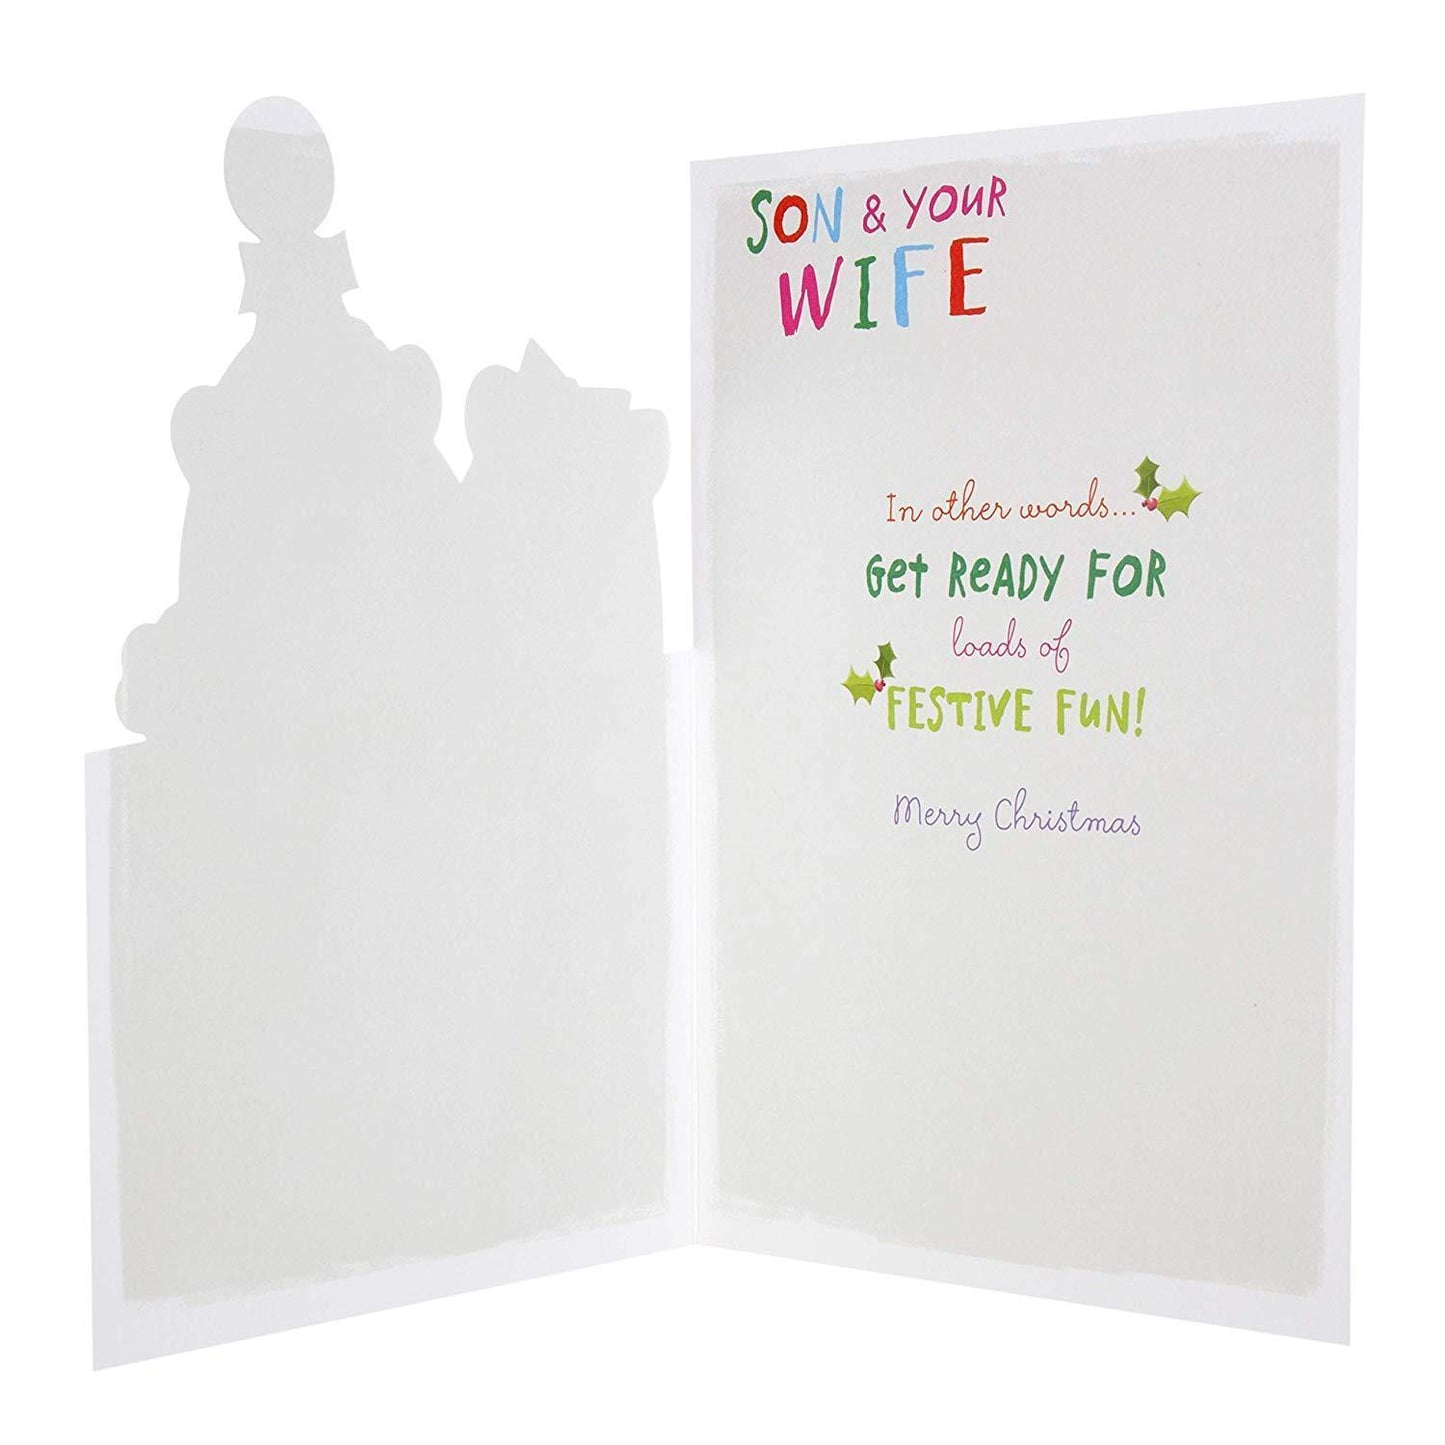 Son and Wife Christmas Card 'Festive Fun'